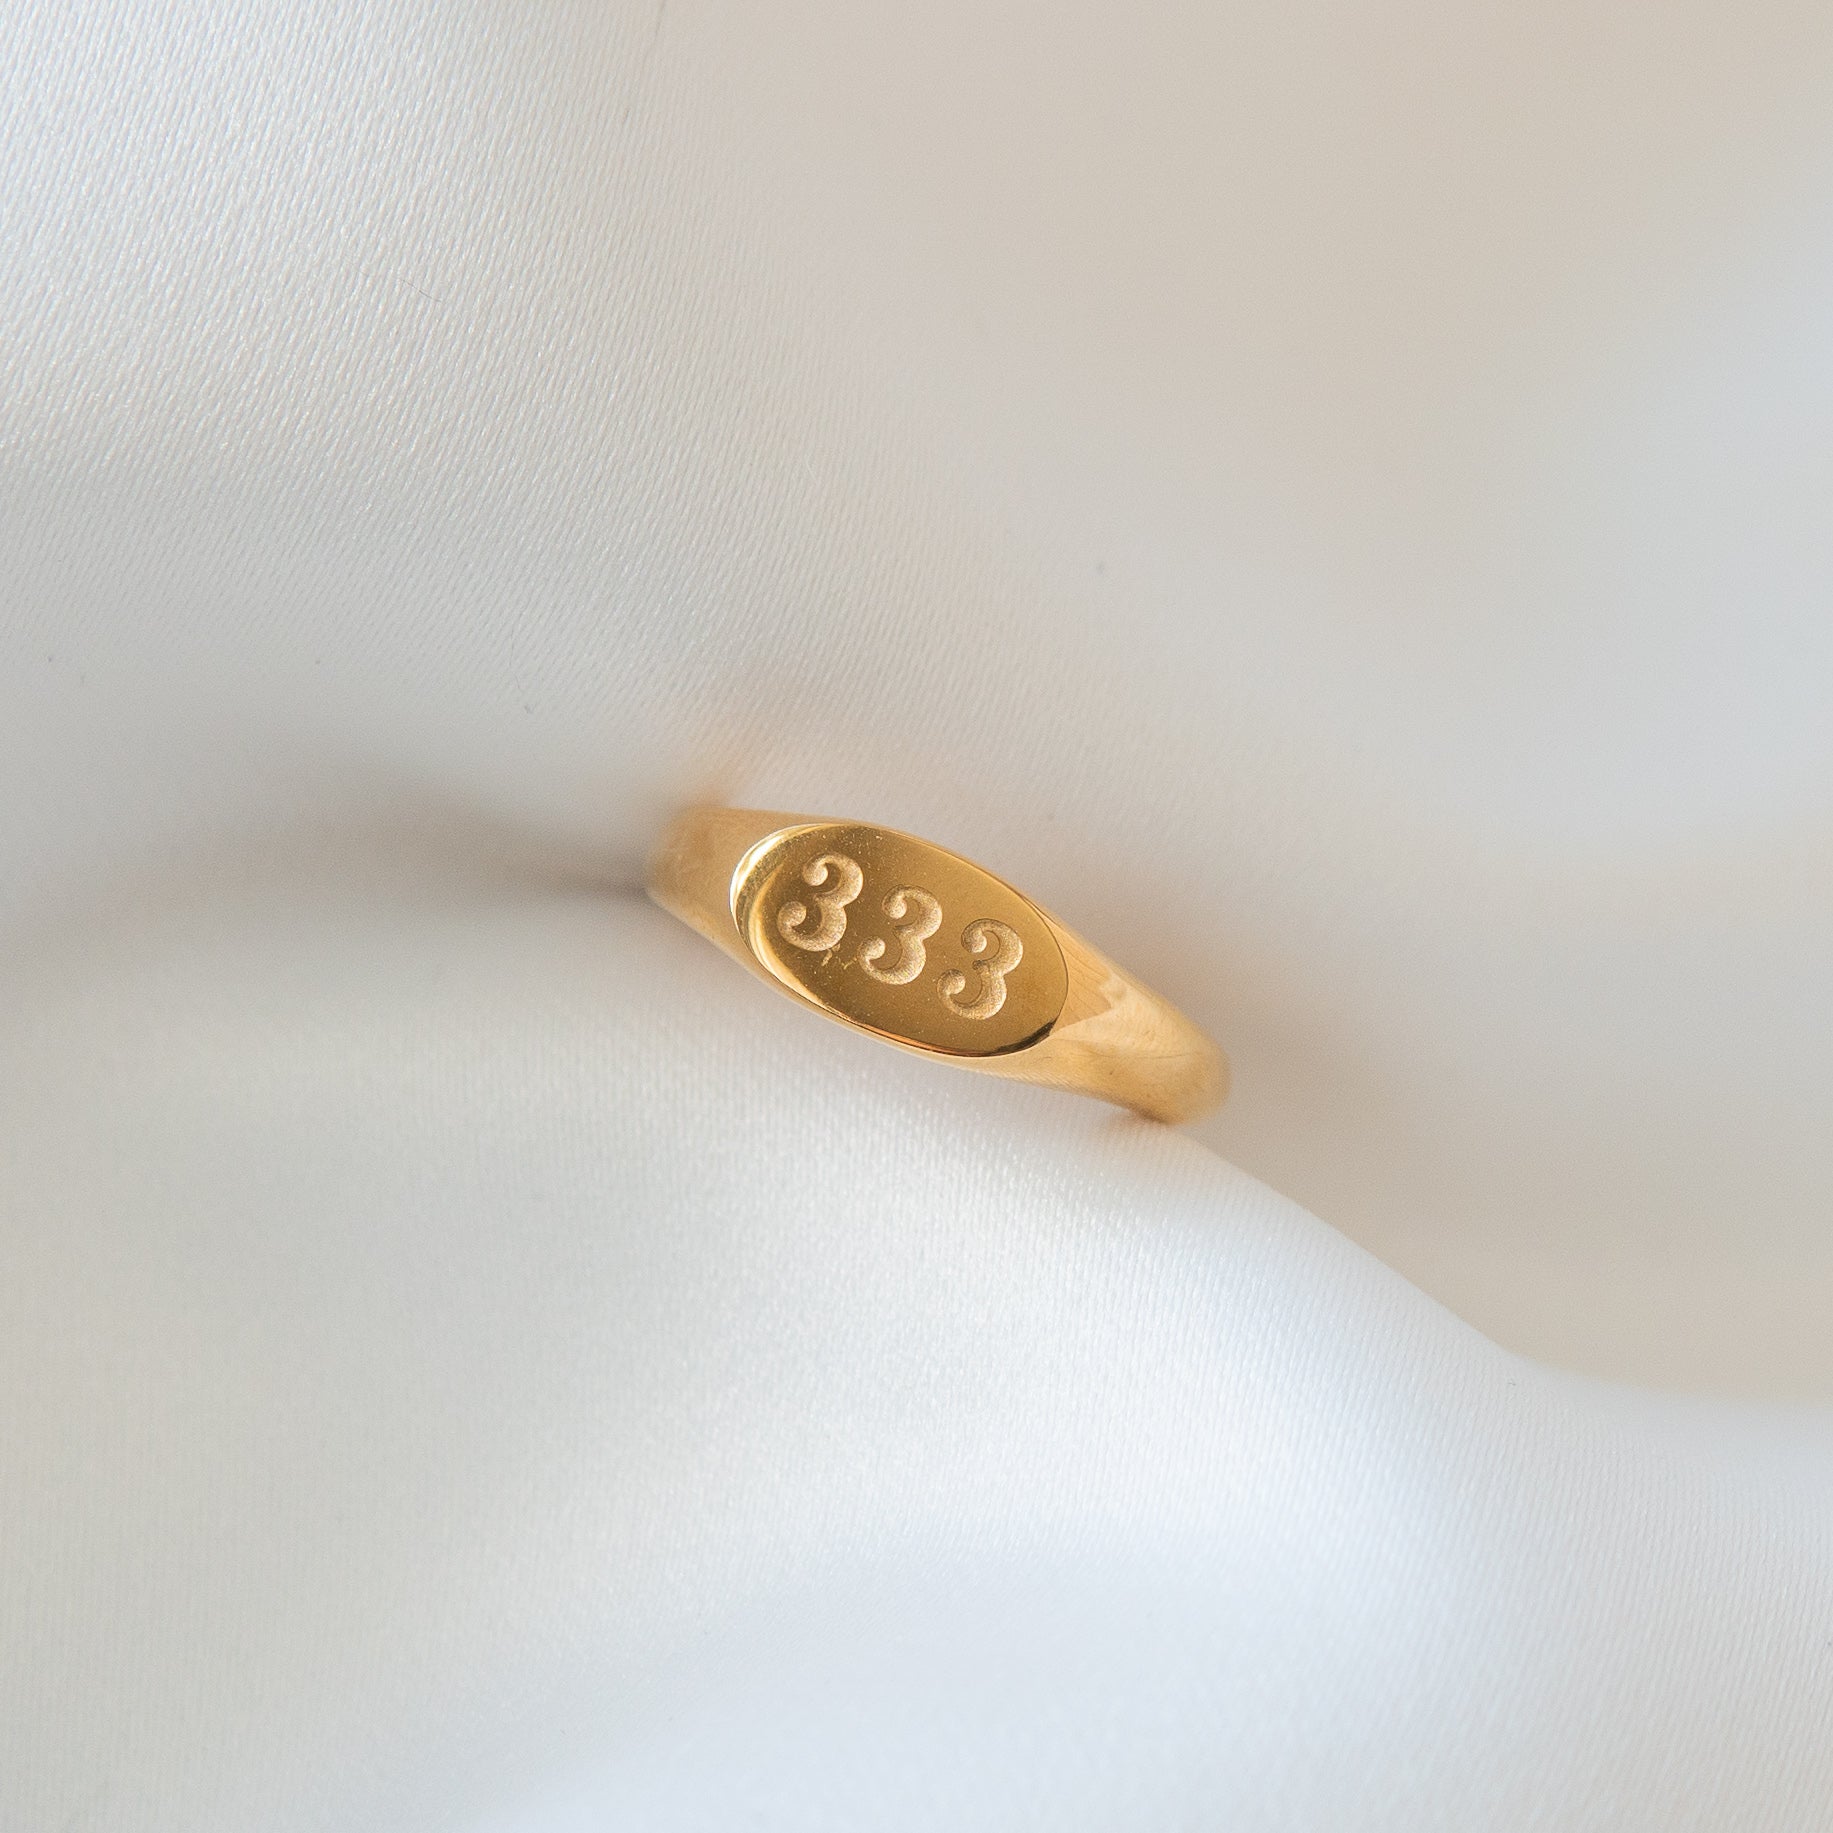 Merak RING 333 – Jewelry